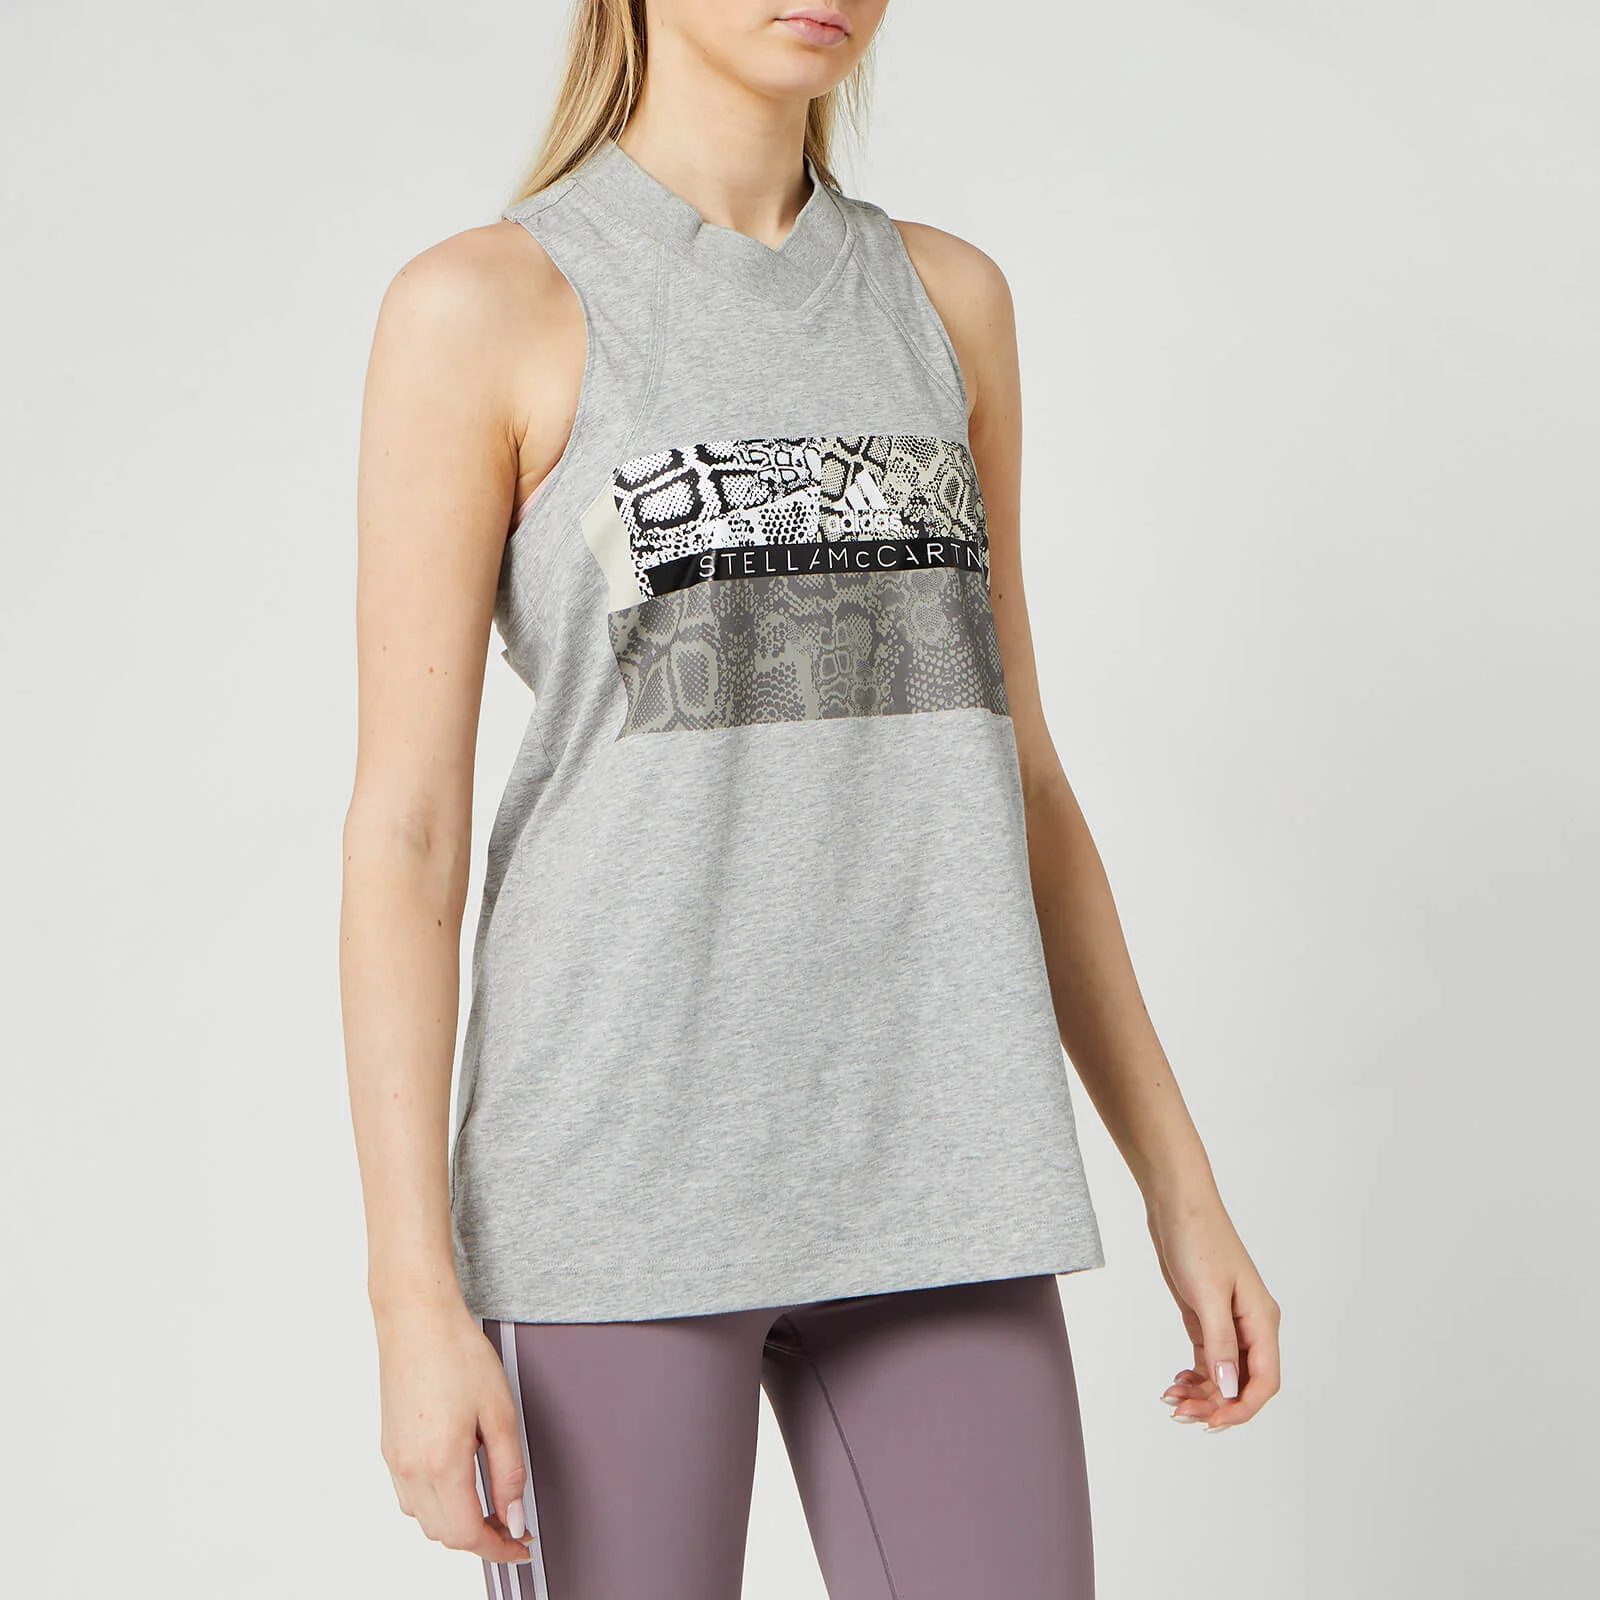 adidas by Stella McCartney Women's Graphic Tank Top - Mid Grey/White Image 1